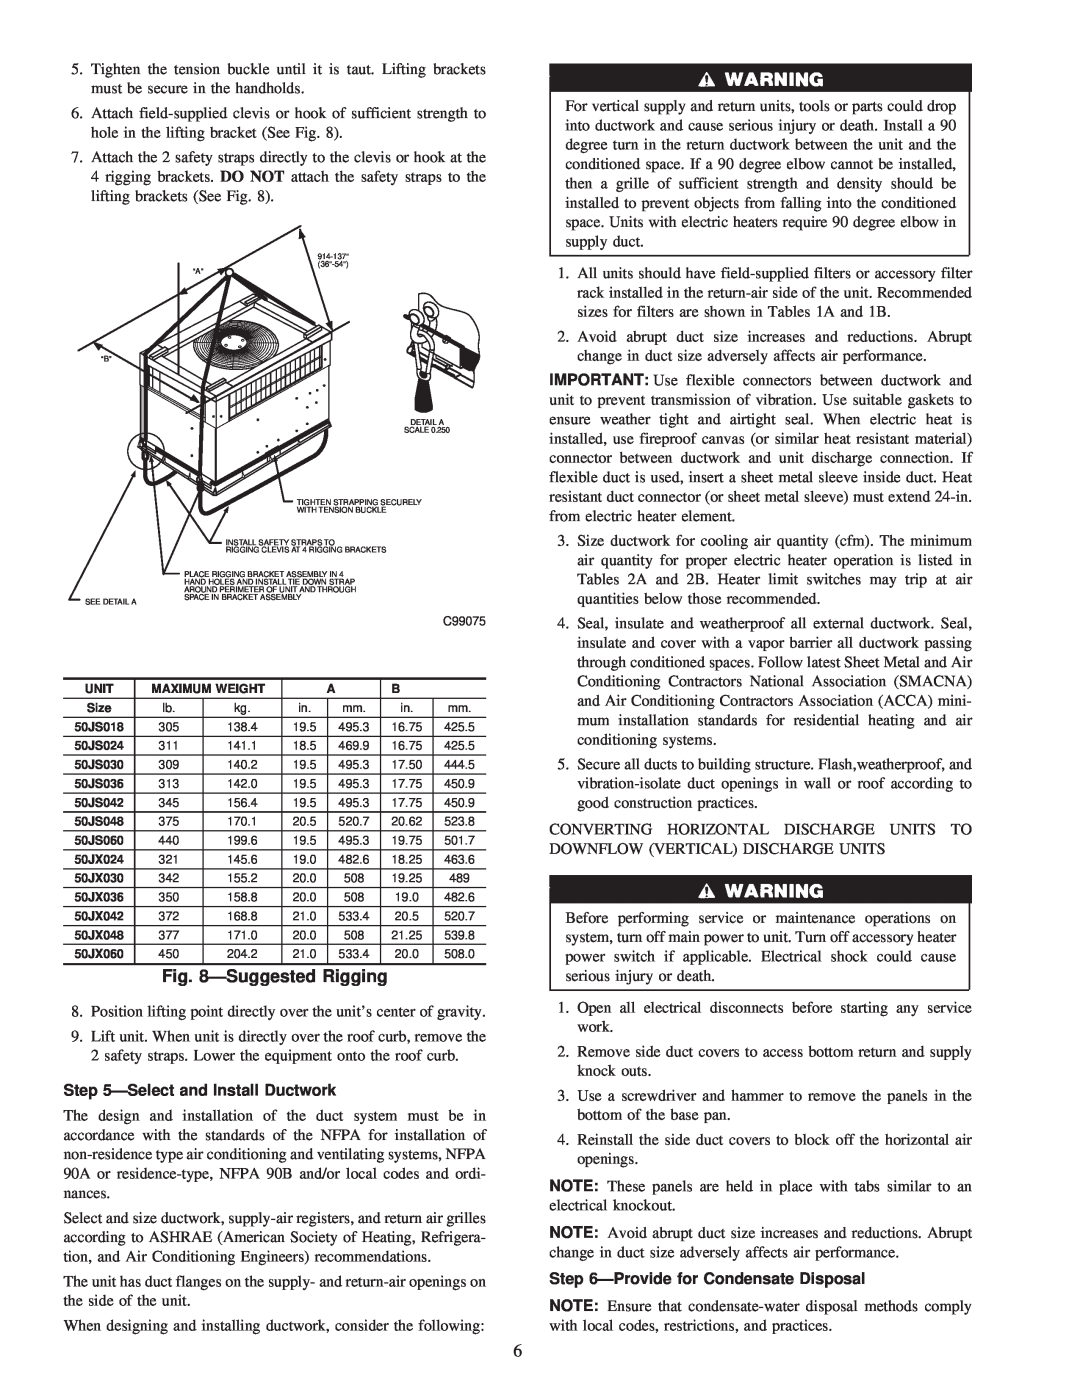 Carrier 50JS instruction manual ÐSuggested Rigging, ÐSelect and Install Ductwork, ÐProvide for Condensate Disposal 